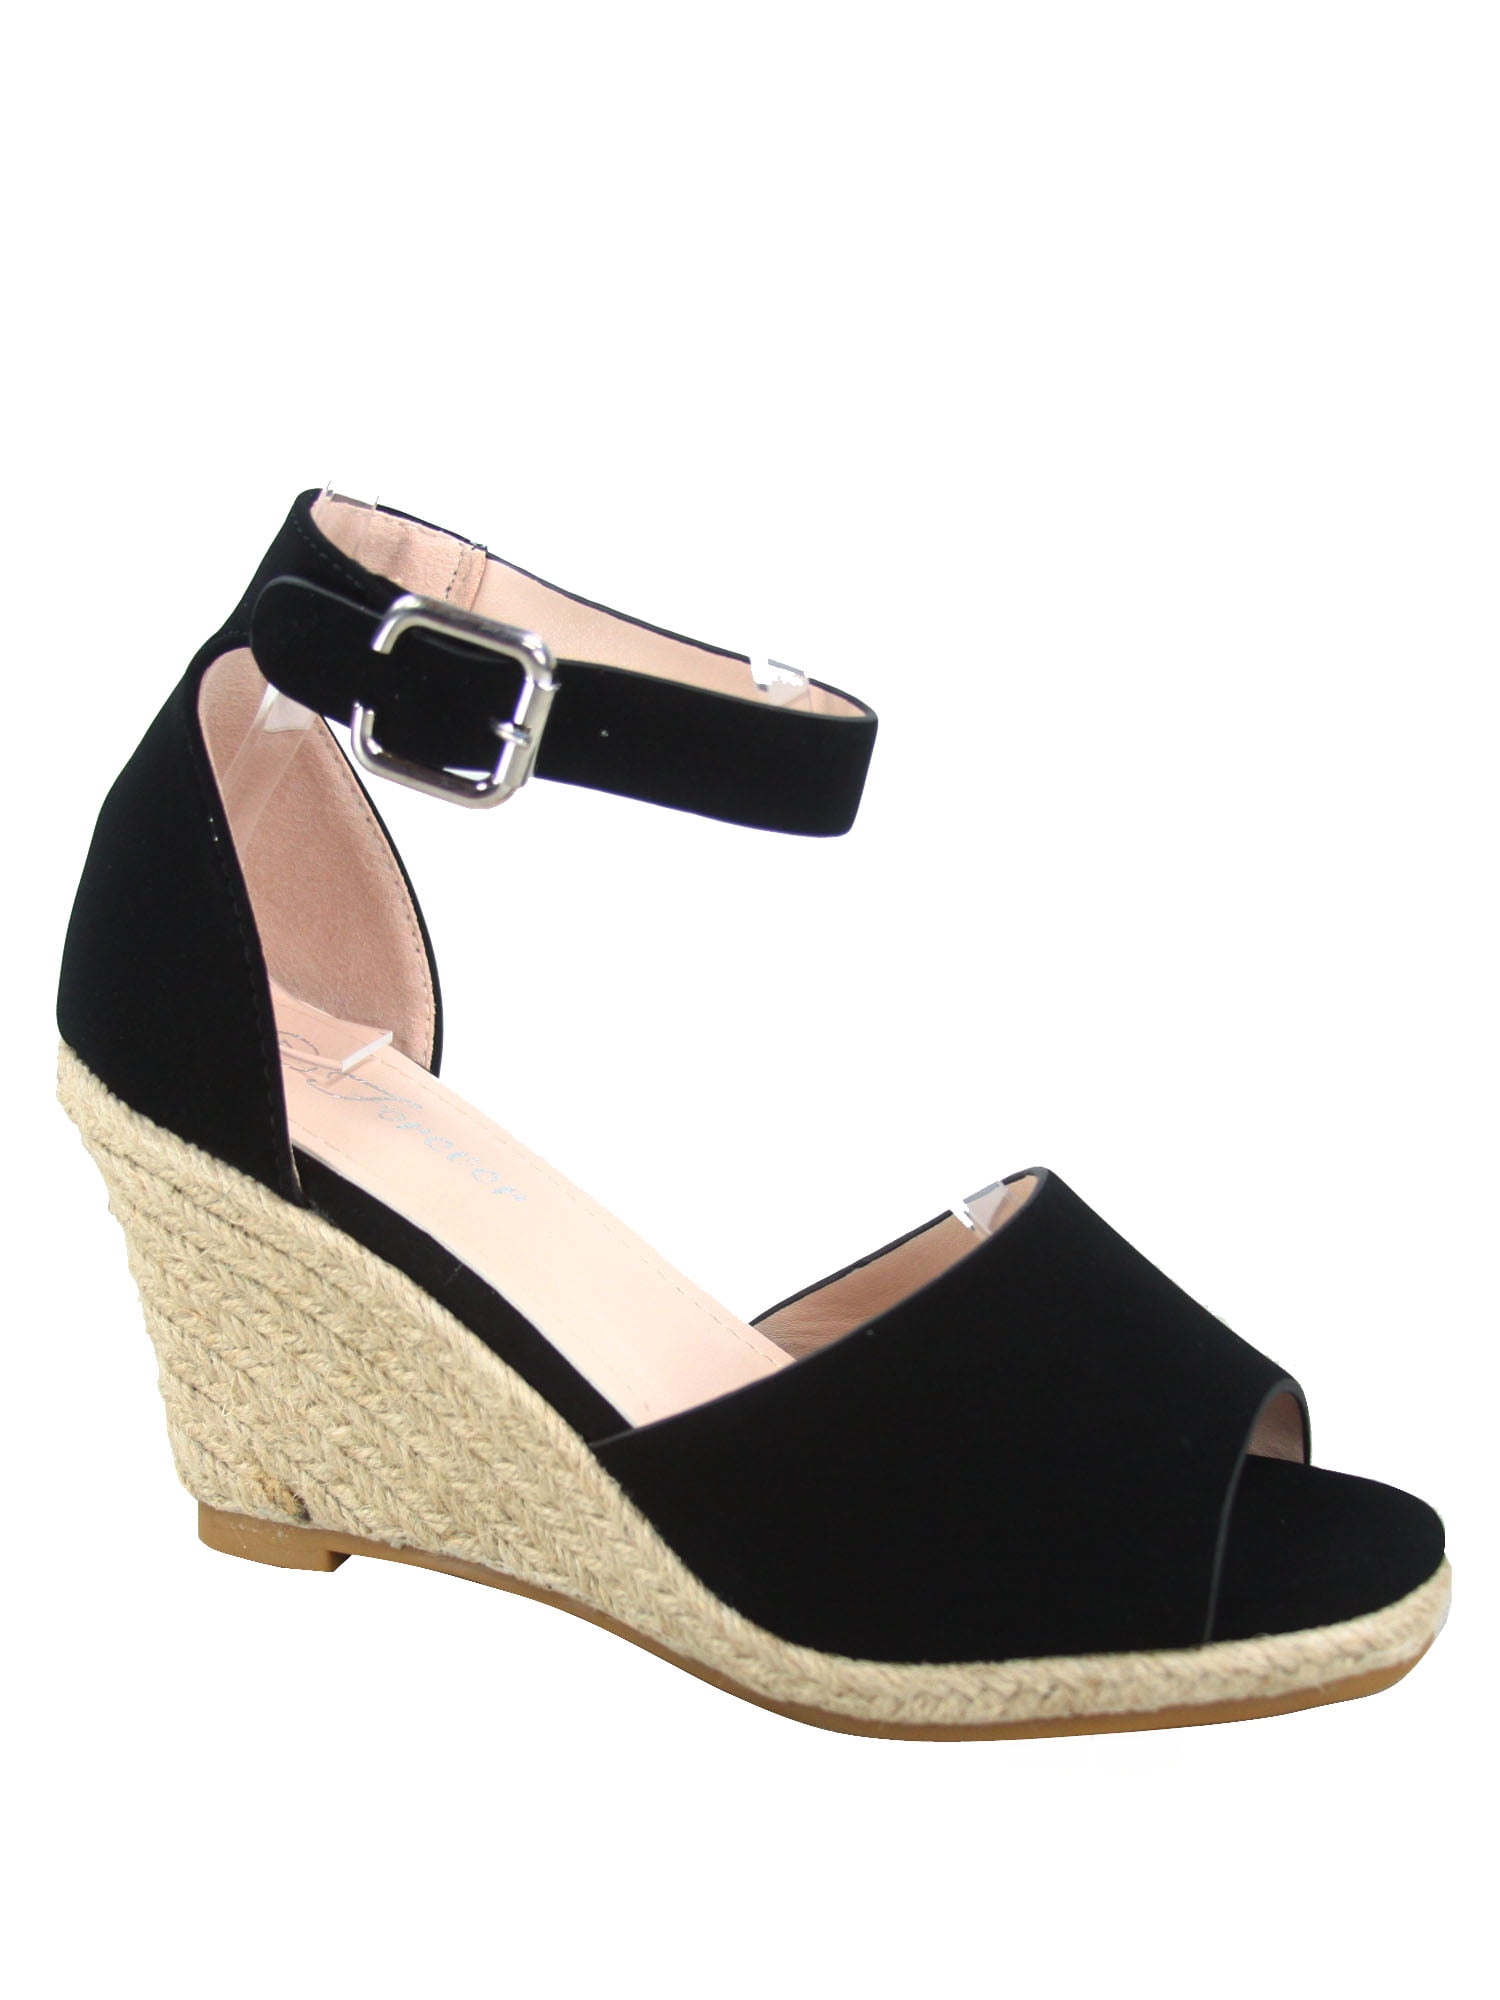 Women Sandals Leather Peep Toe Wedge Heels Cross-Strap Slingback Platform Shoes 